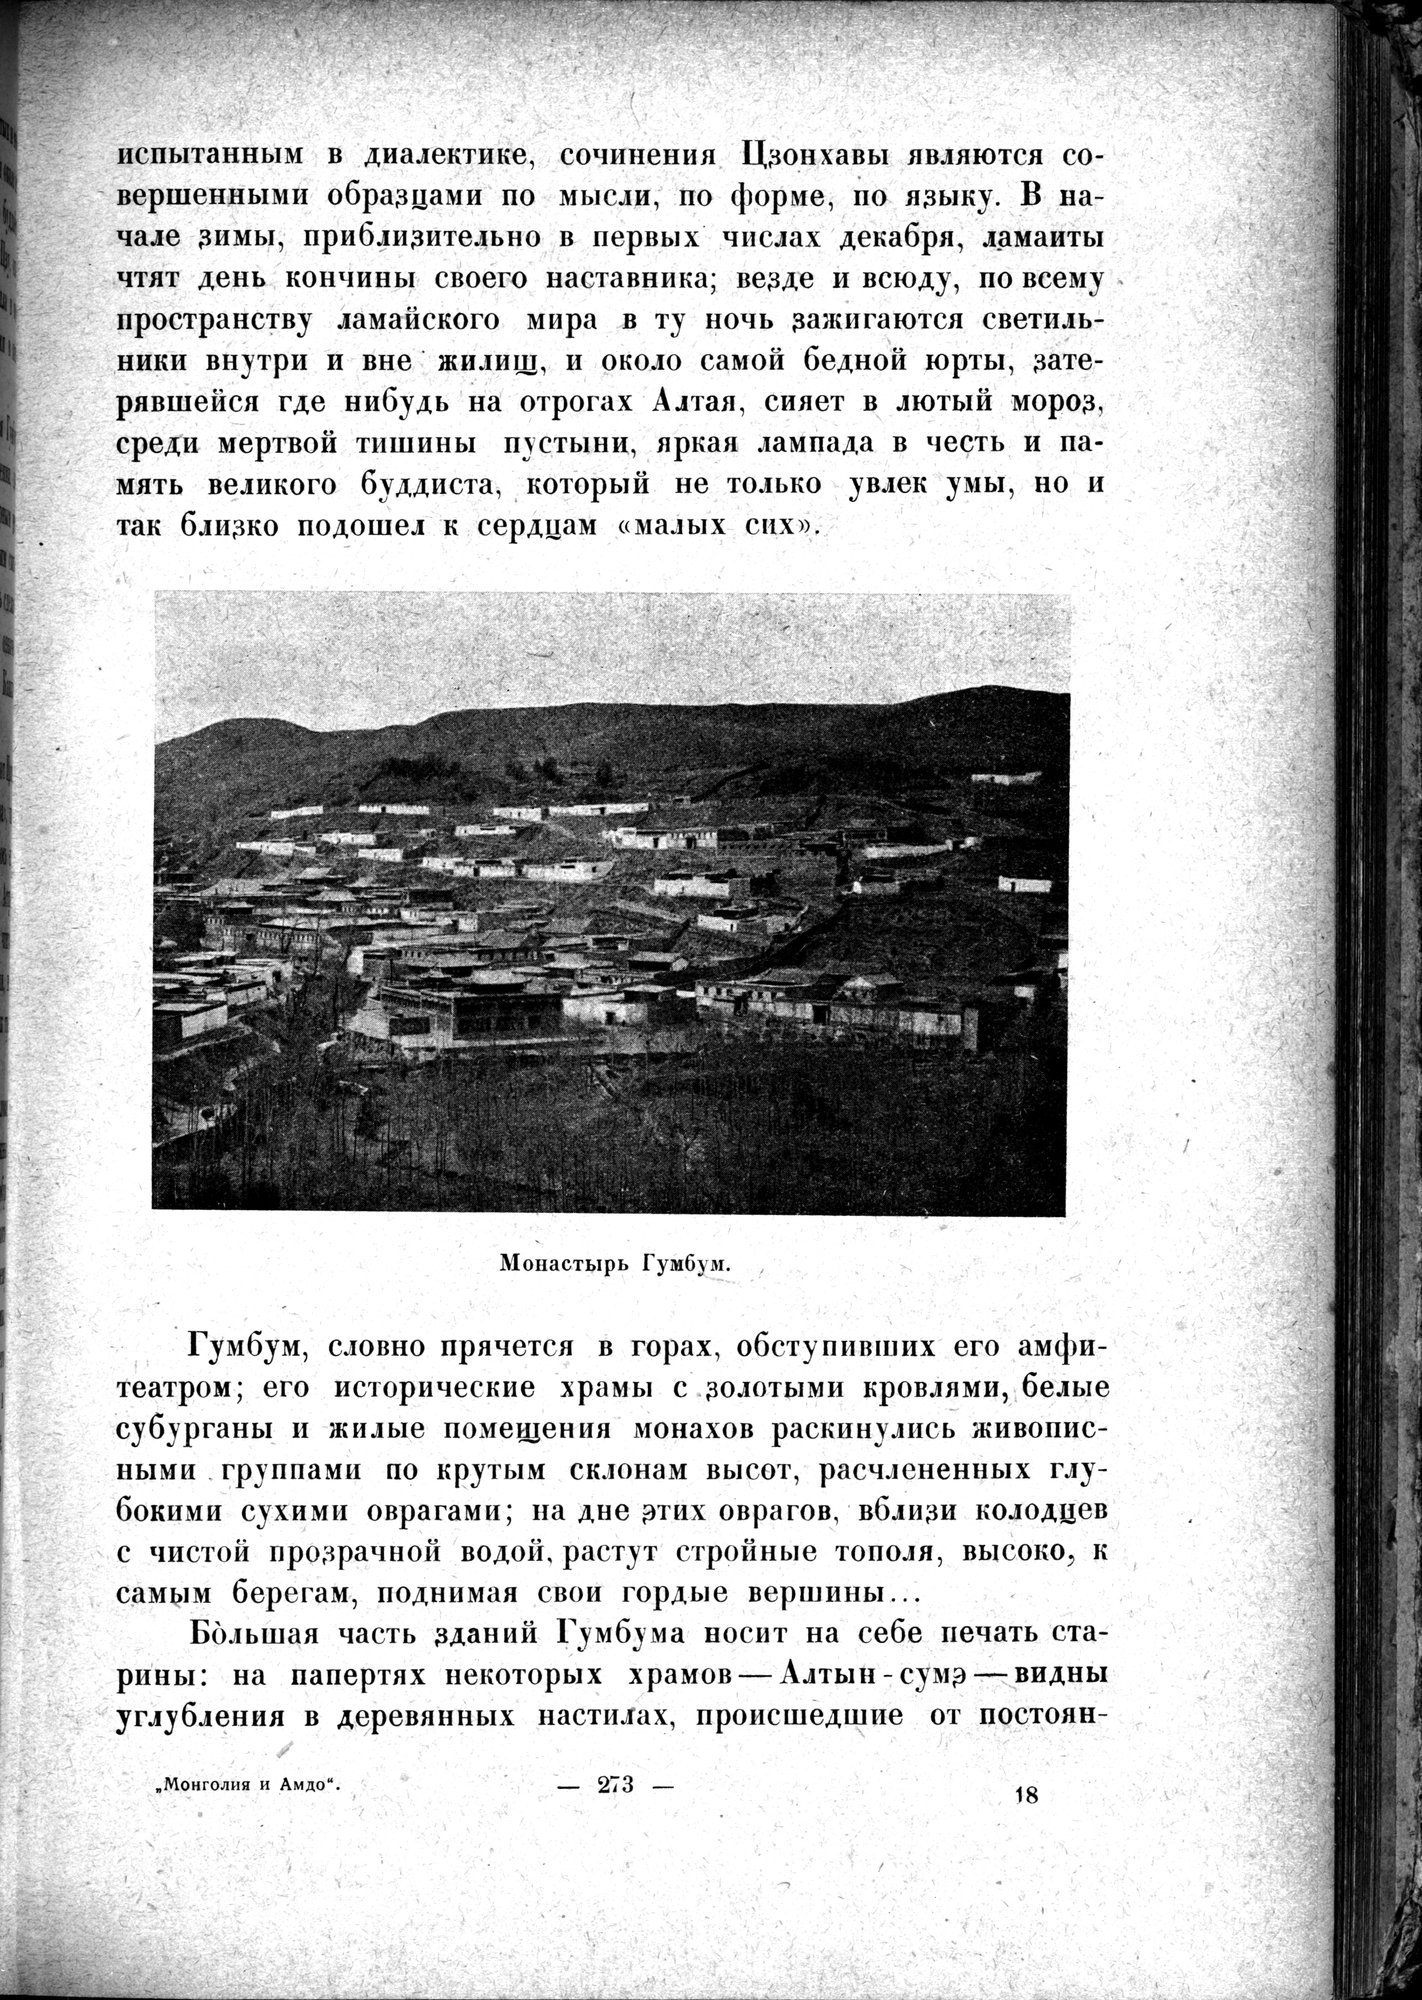 Mongoliya i Amdo i mertby gorod Khara-Khoto : vol.1 / Page 323 (Grayscale High Resolution Image)